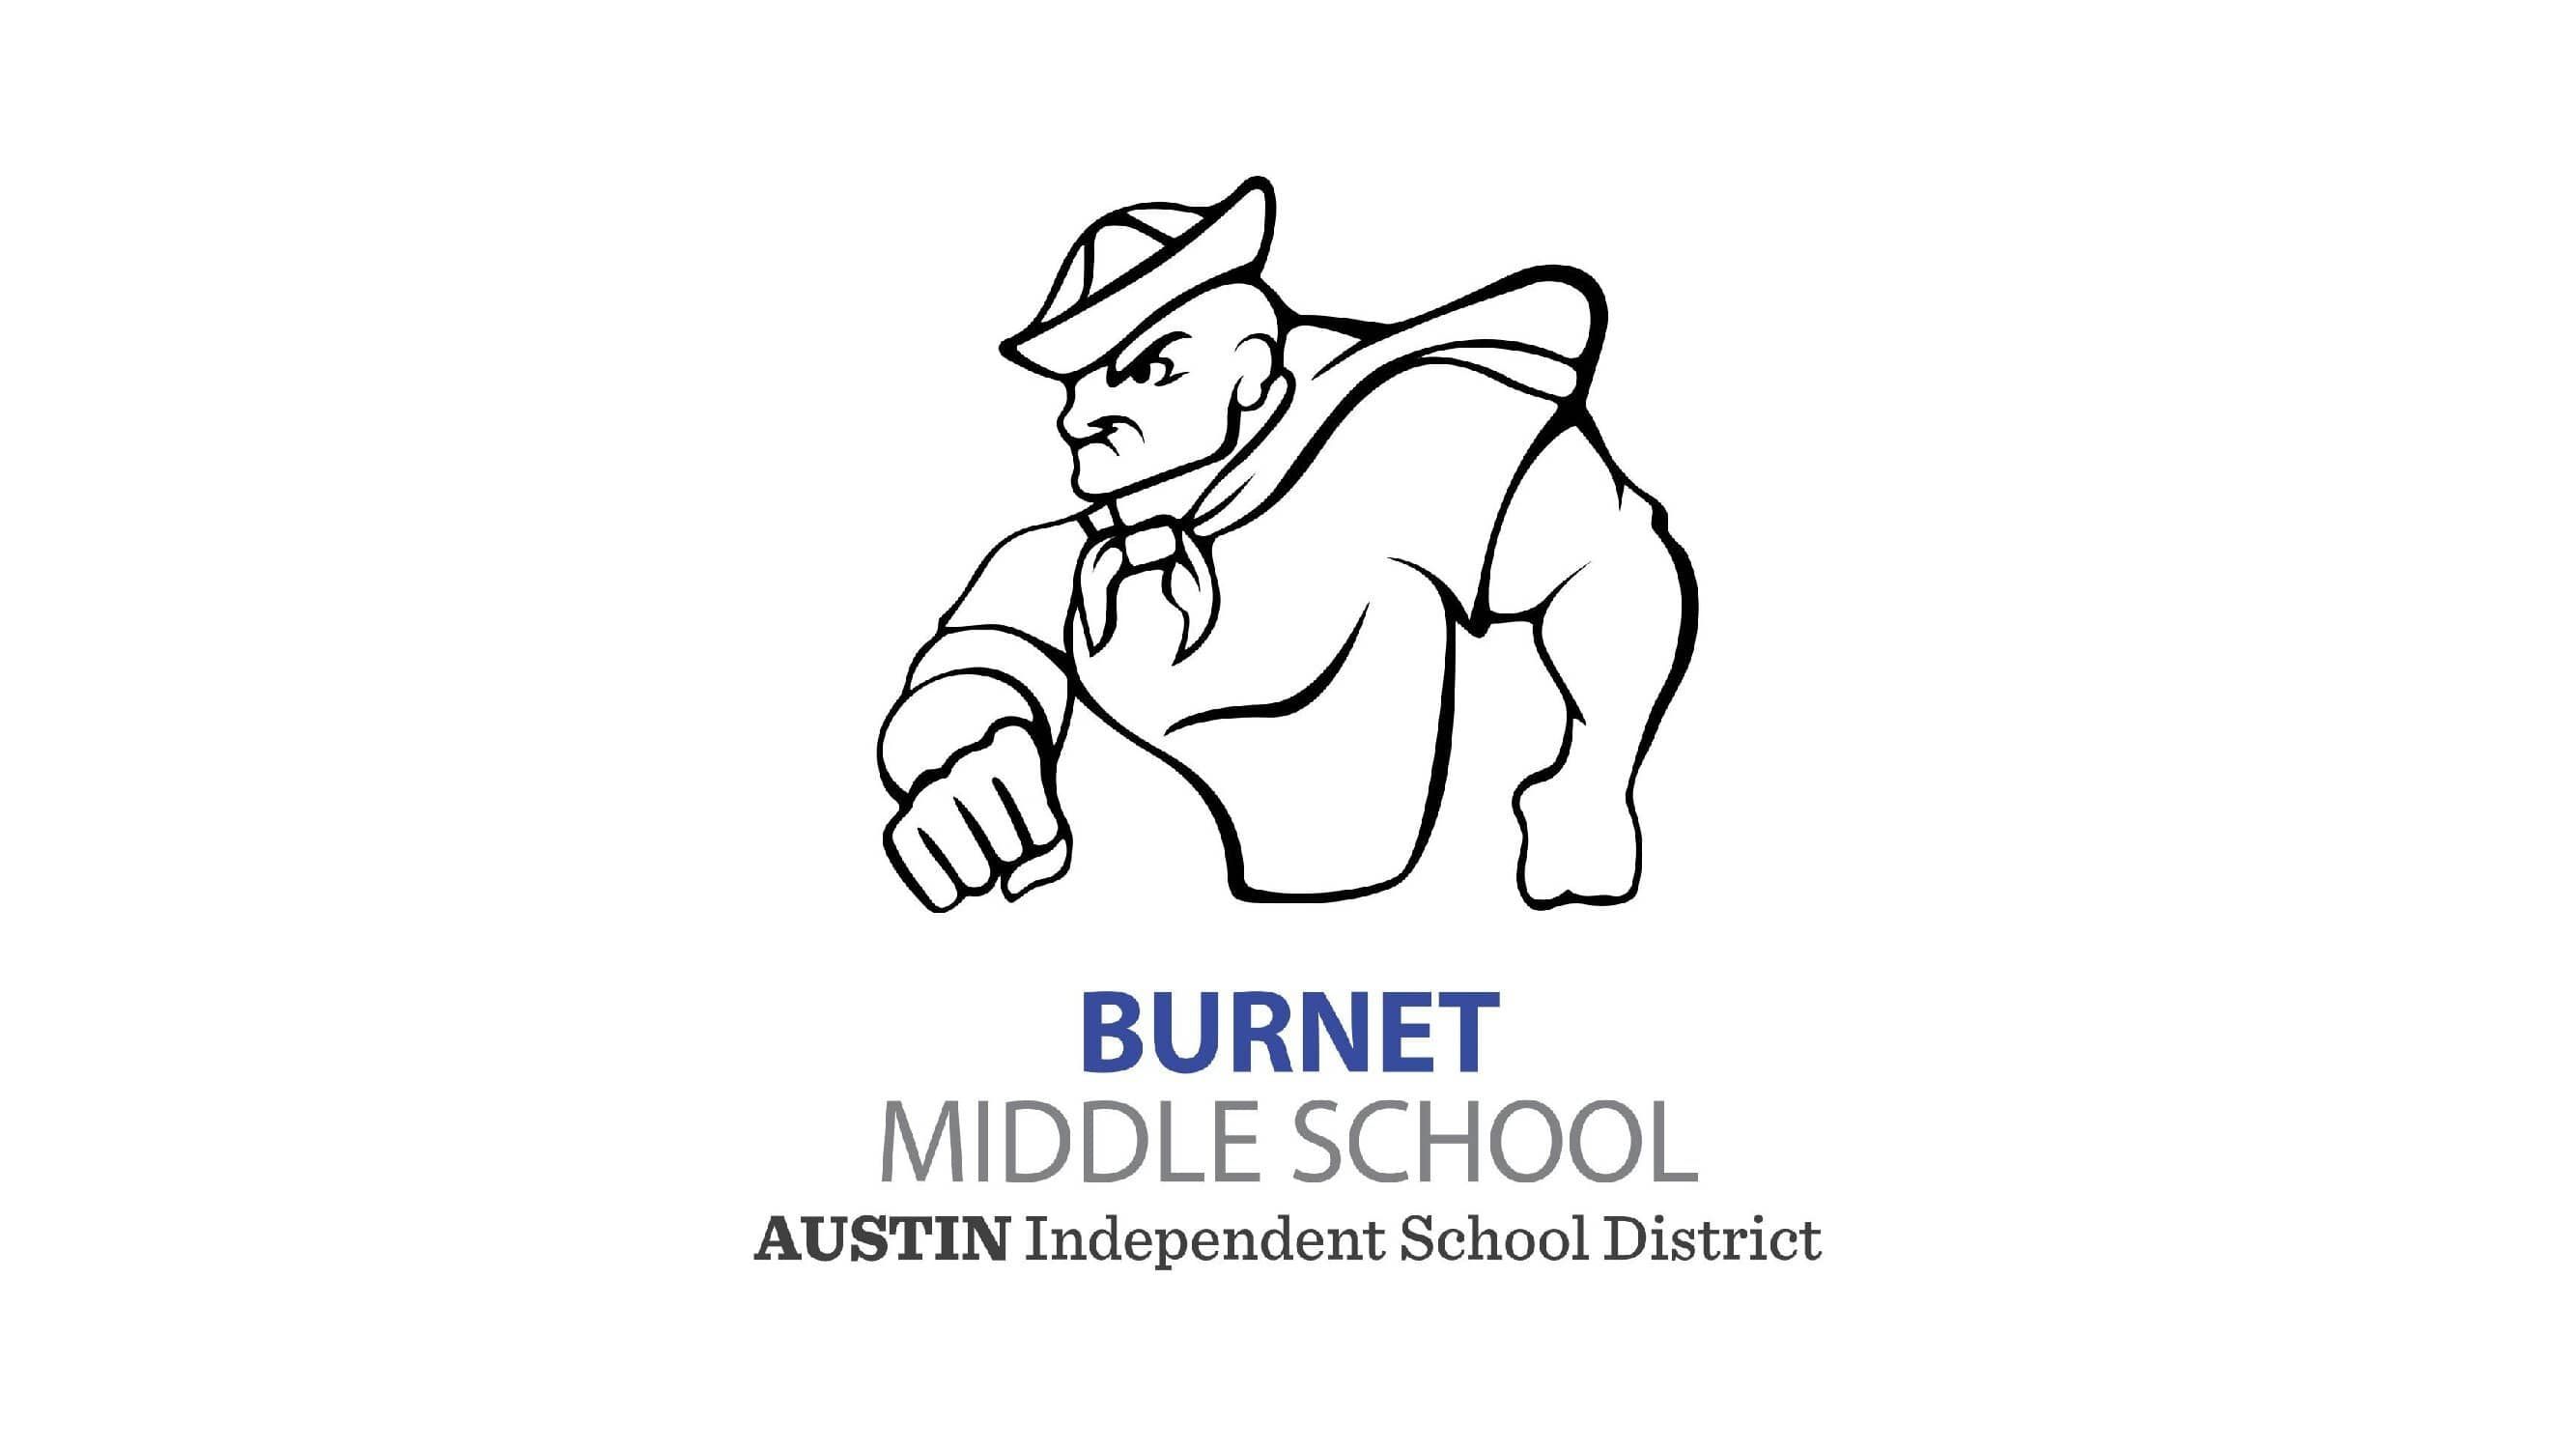 Burnet Middle School